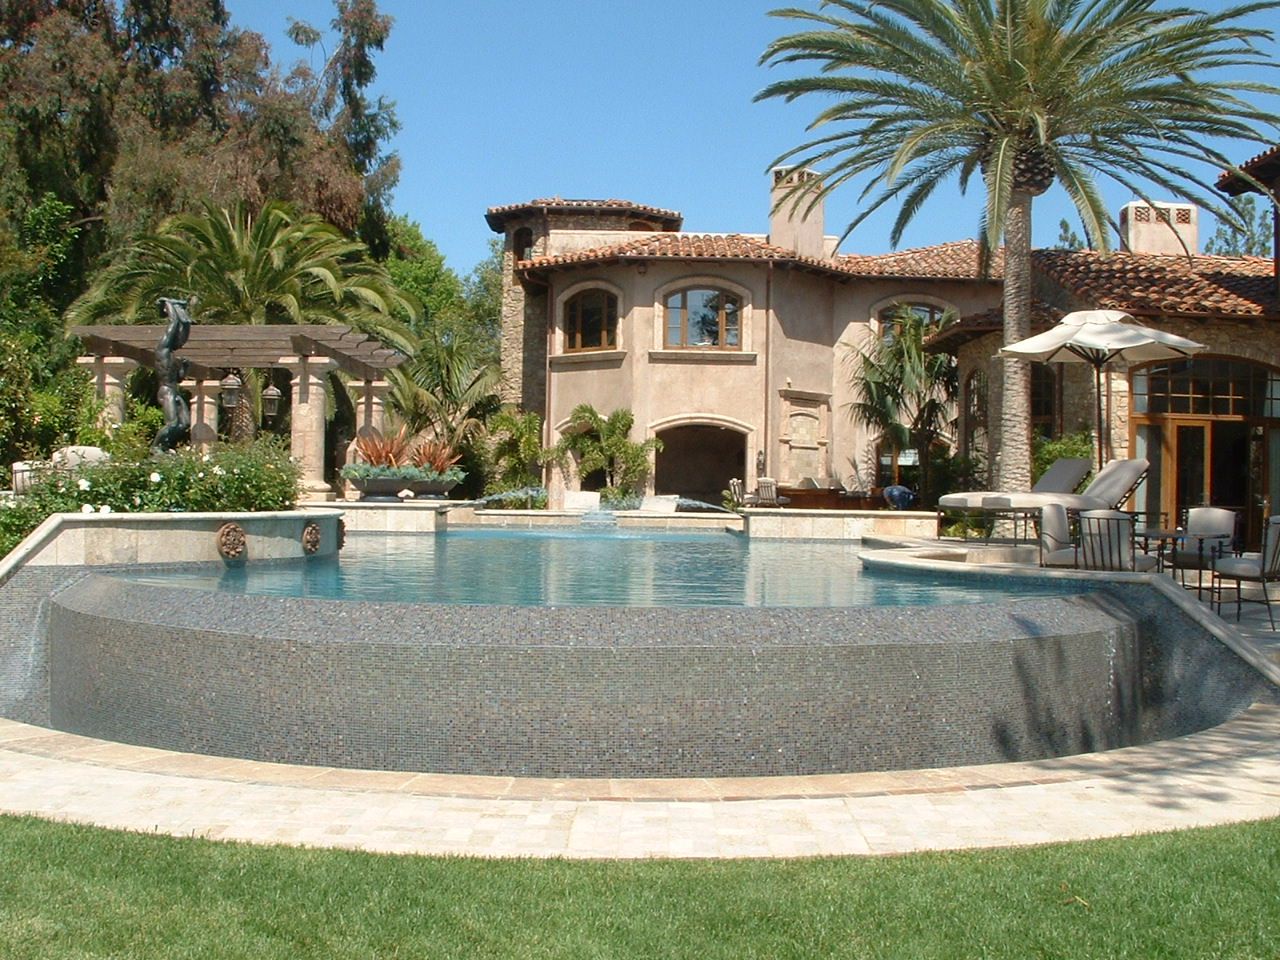 Pools and Spas in Carlsbad, CA - San Diego Dream Pools and Spas